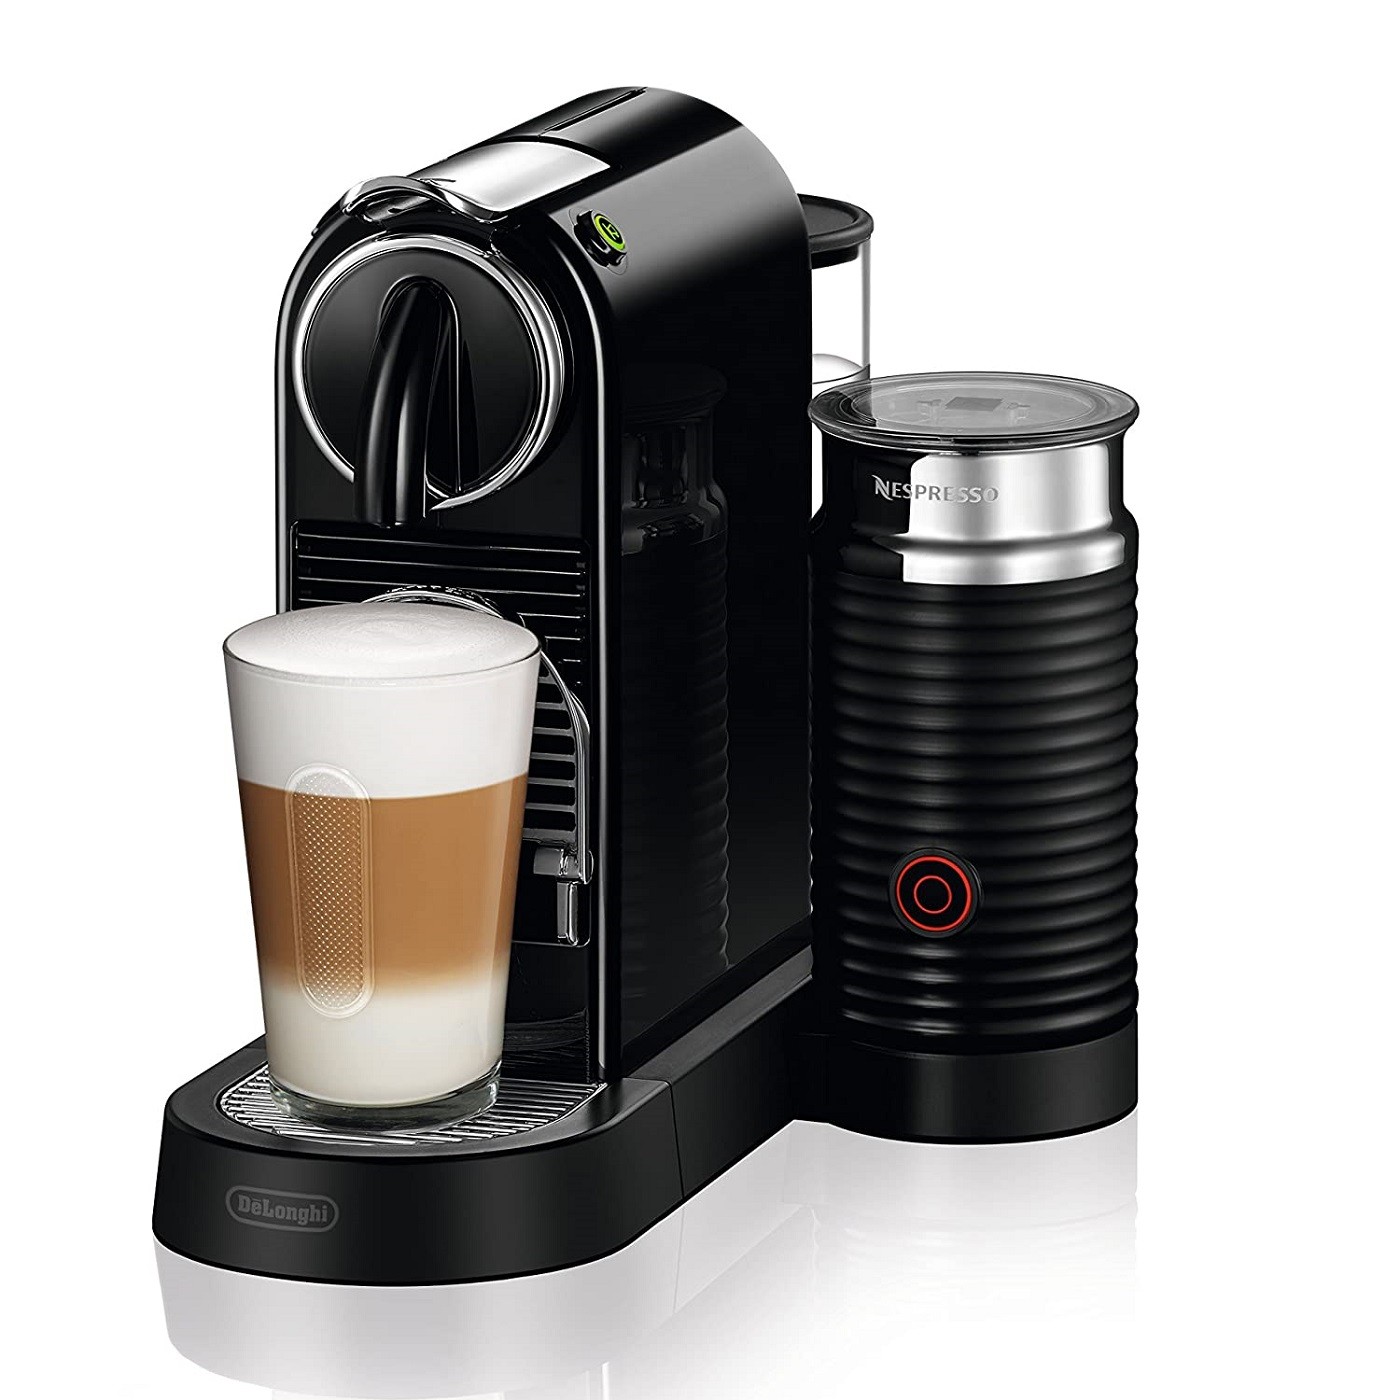 اسپرسوساز نسپرسو دلونگی مدل  Citiz and Milk EN 267 BAE - Delonghi Citiz & Milk EN 267.BAE Nespresso System